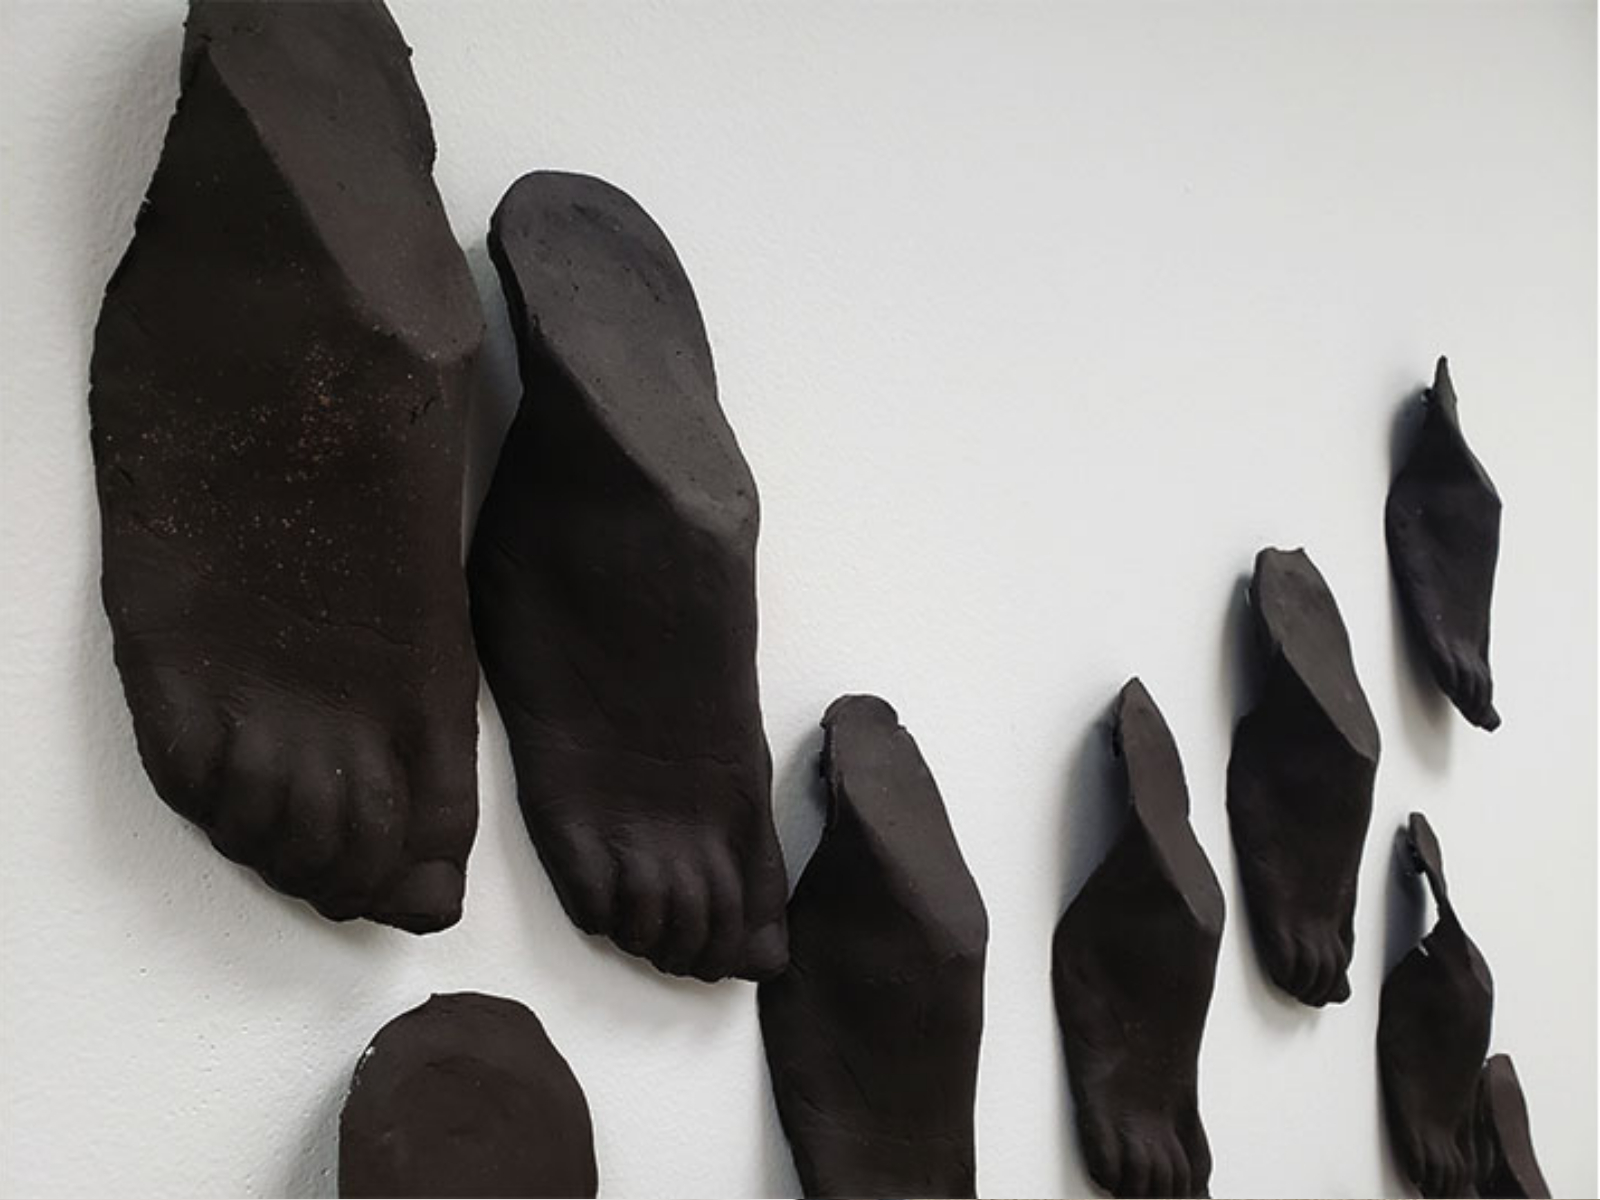 Nyasha Madamombe, Best Foot Forward, 2020, ceramics installation, 84" x 45" x 2"